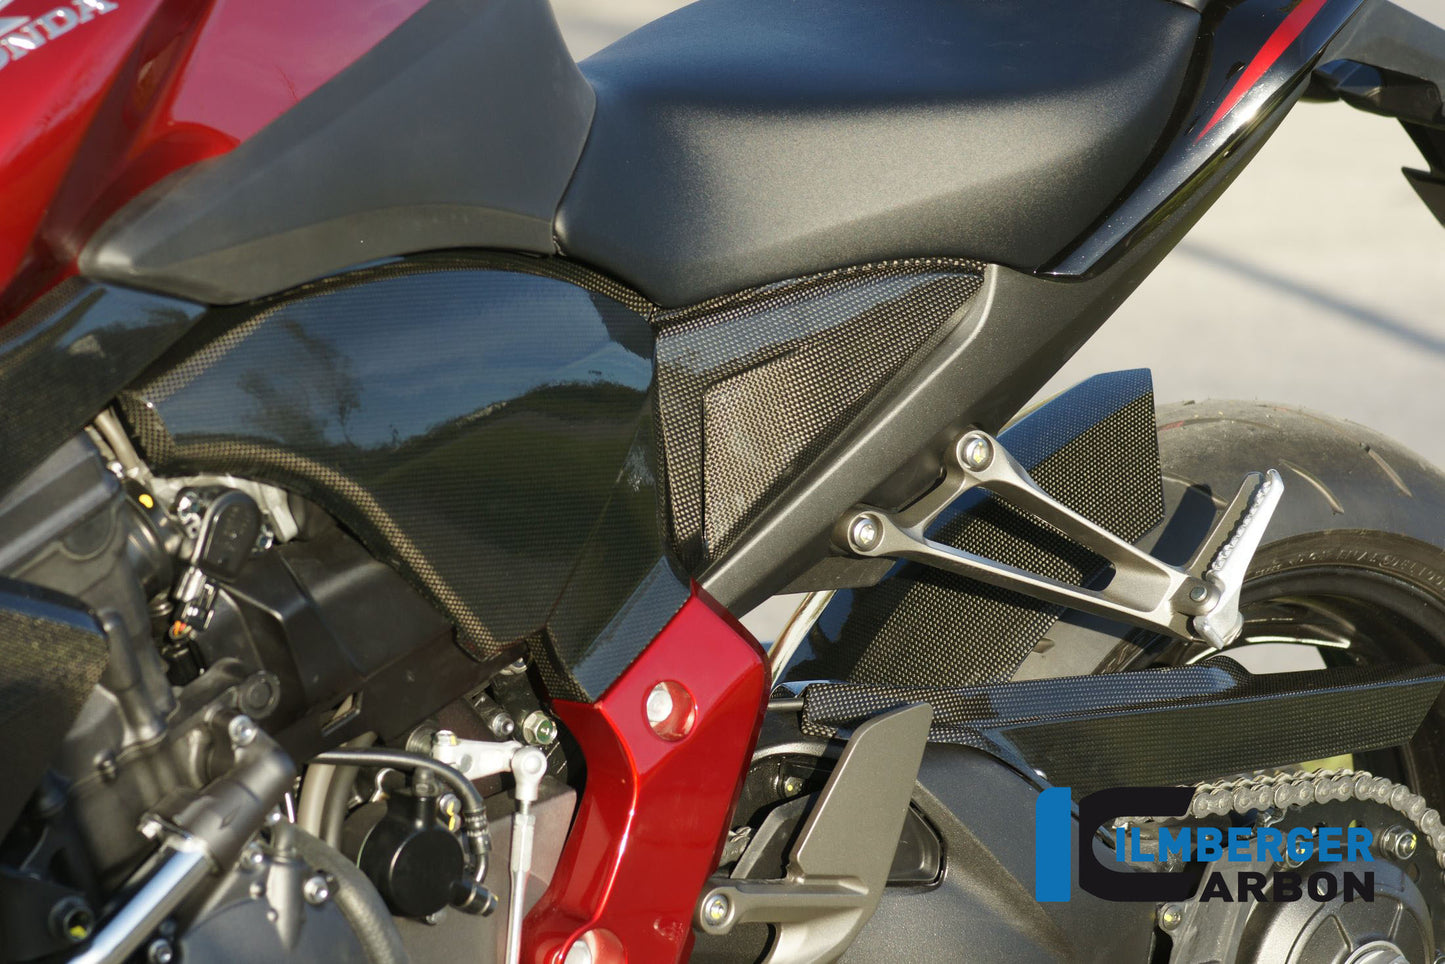 Honda CB1000R - Averys Motorcycles